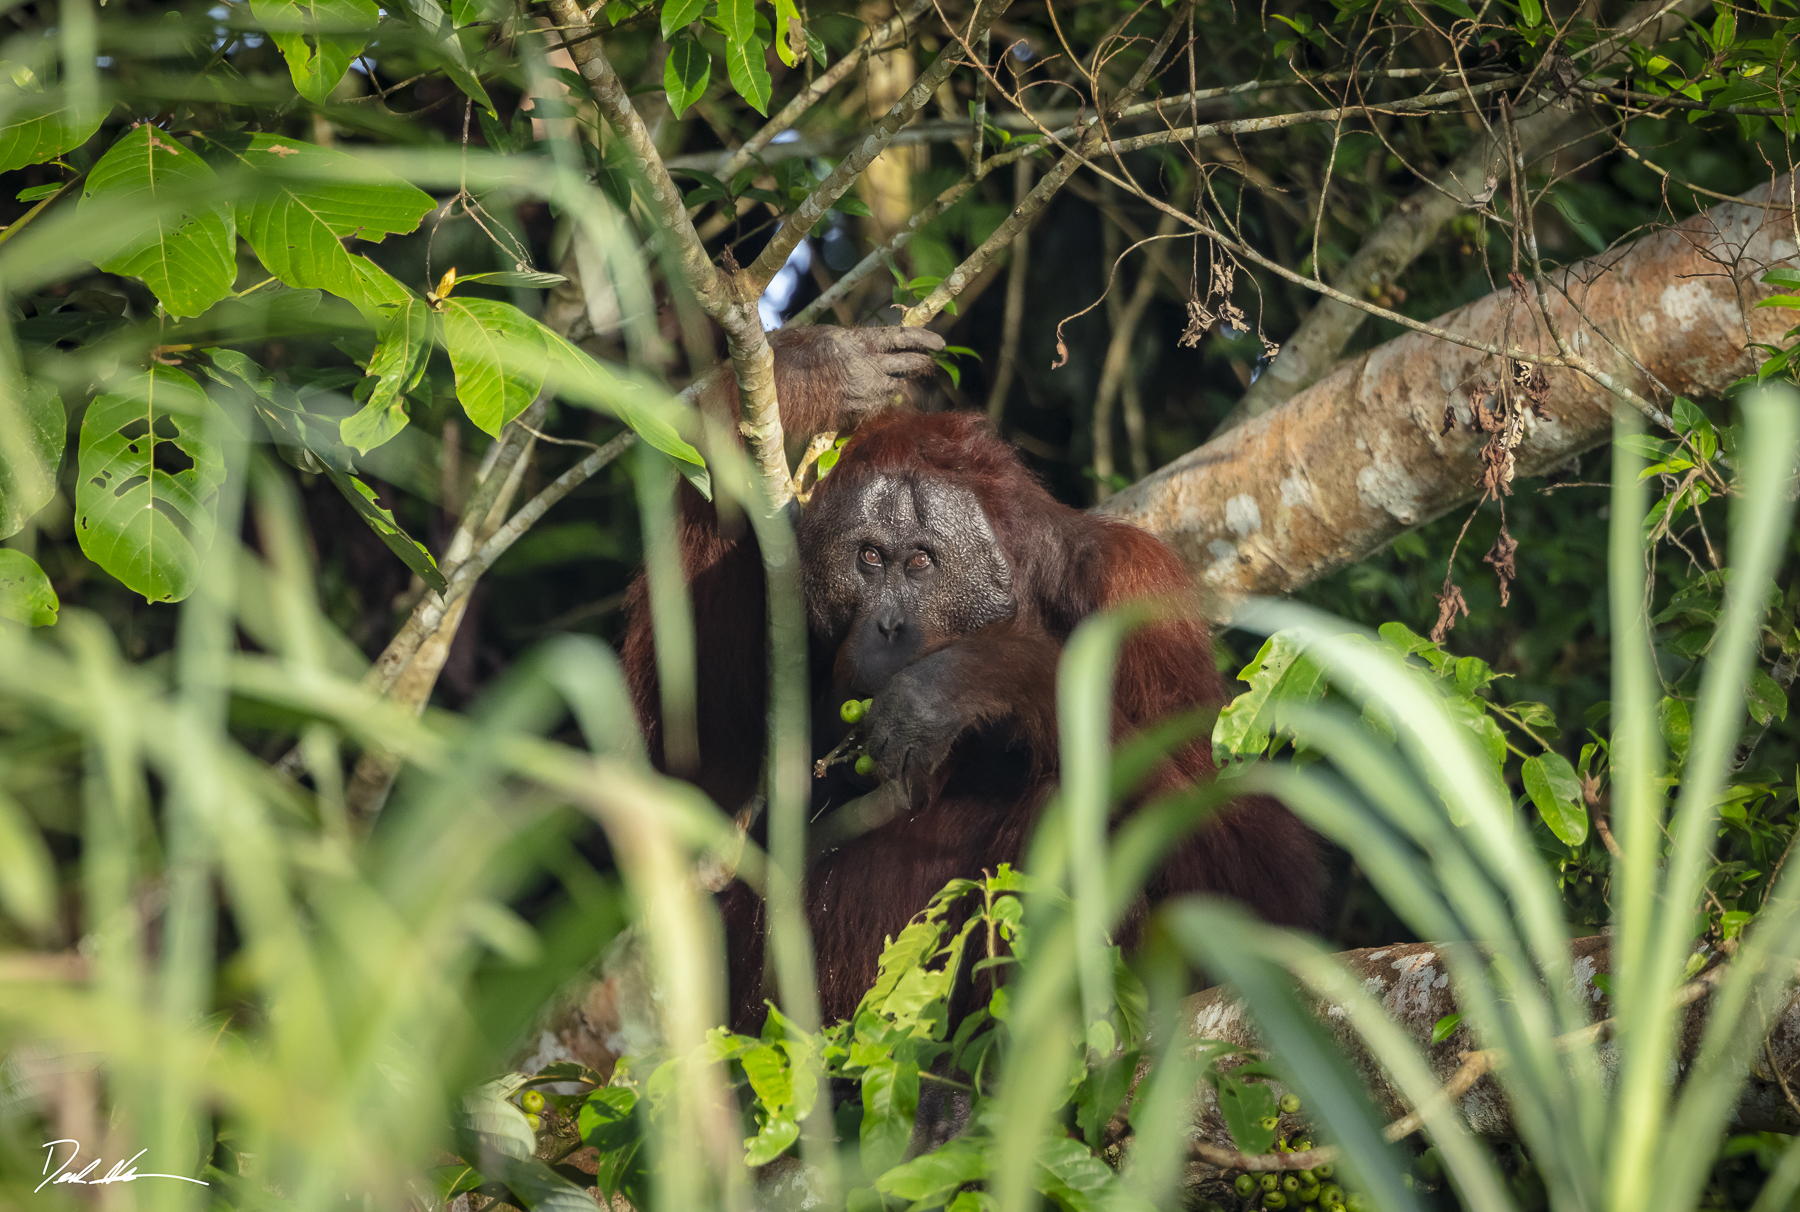 Orangutan in Borneo looking at deforestation